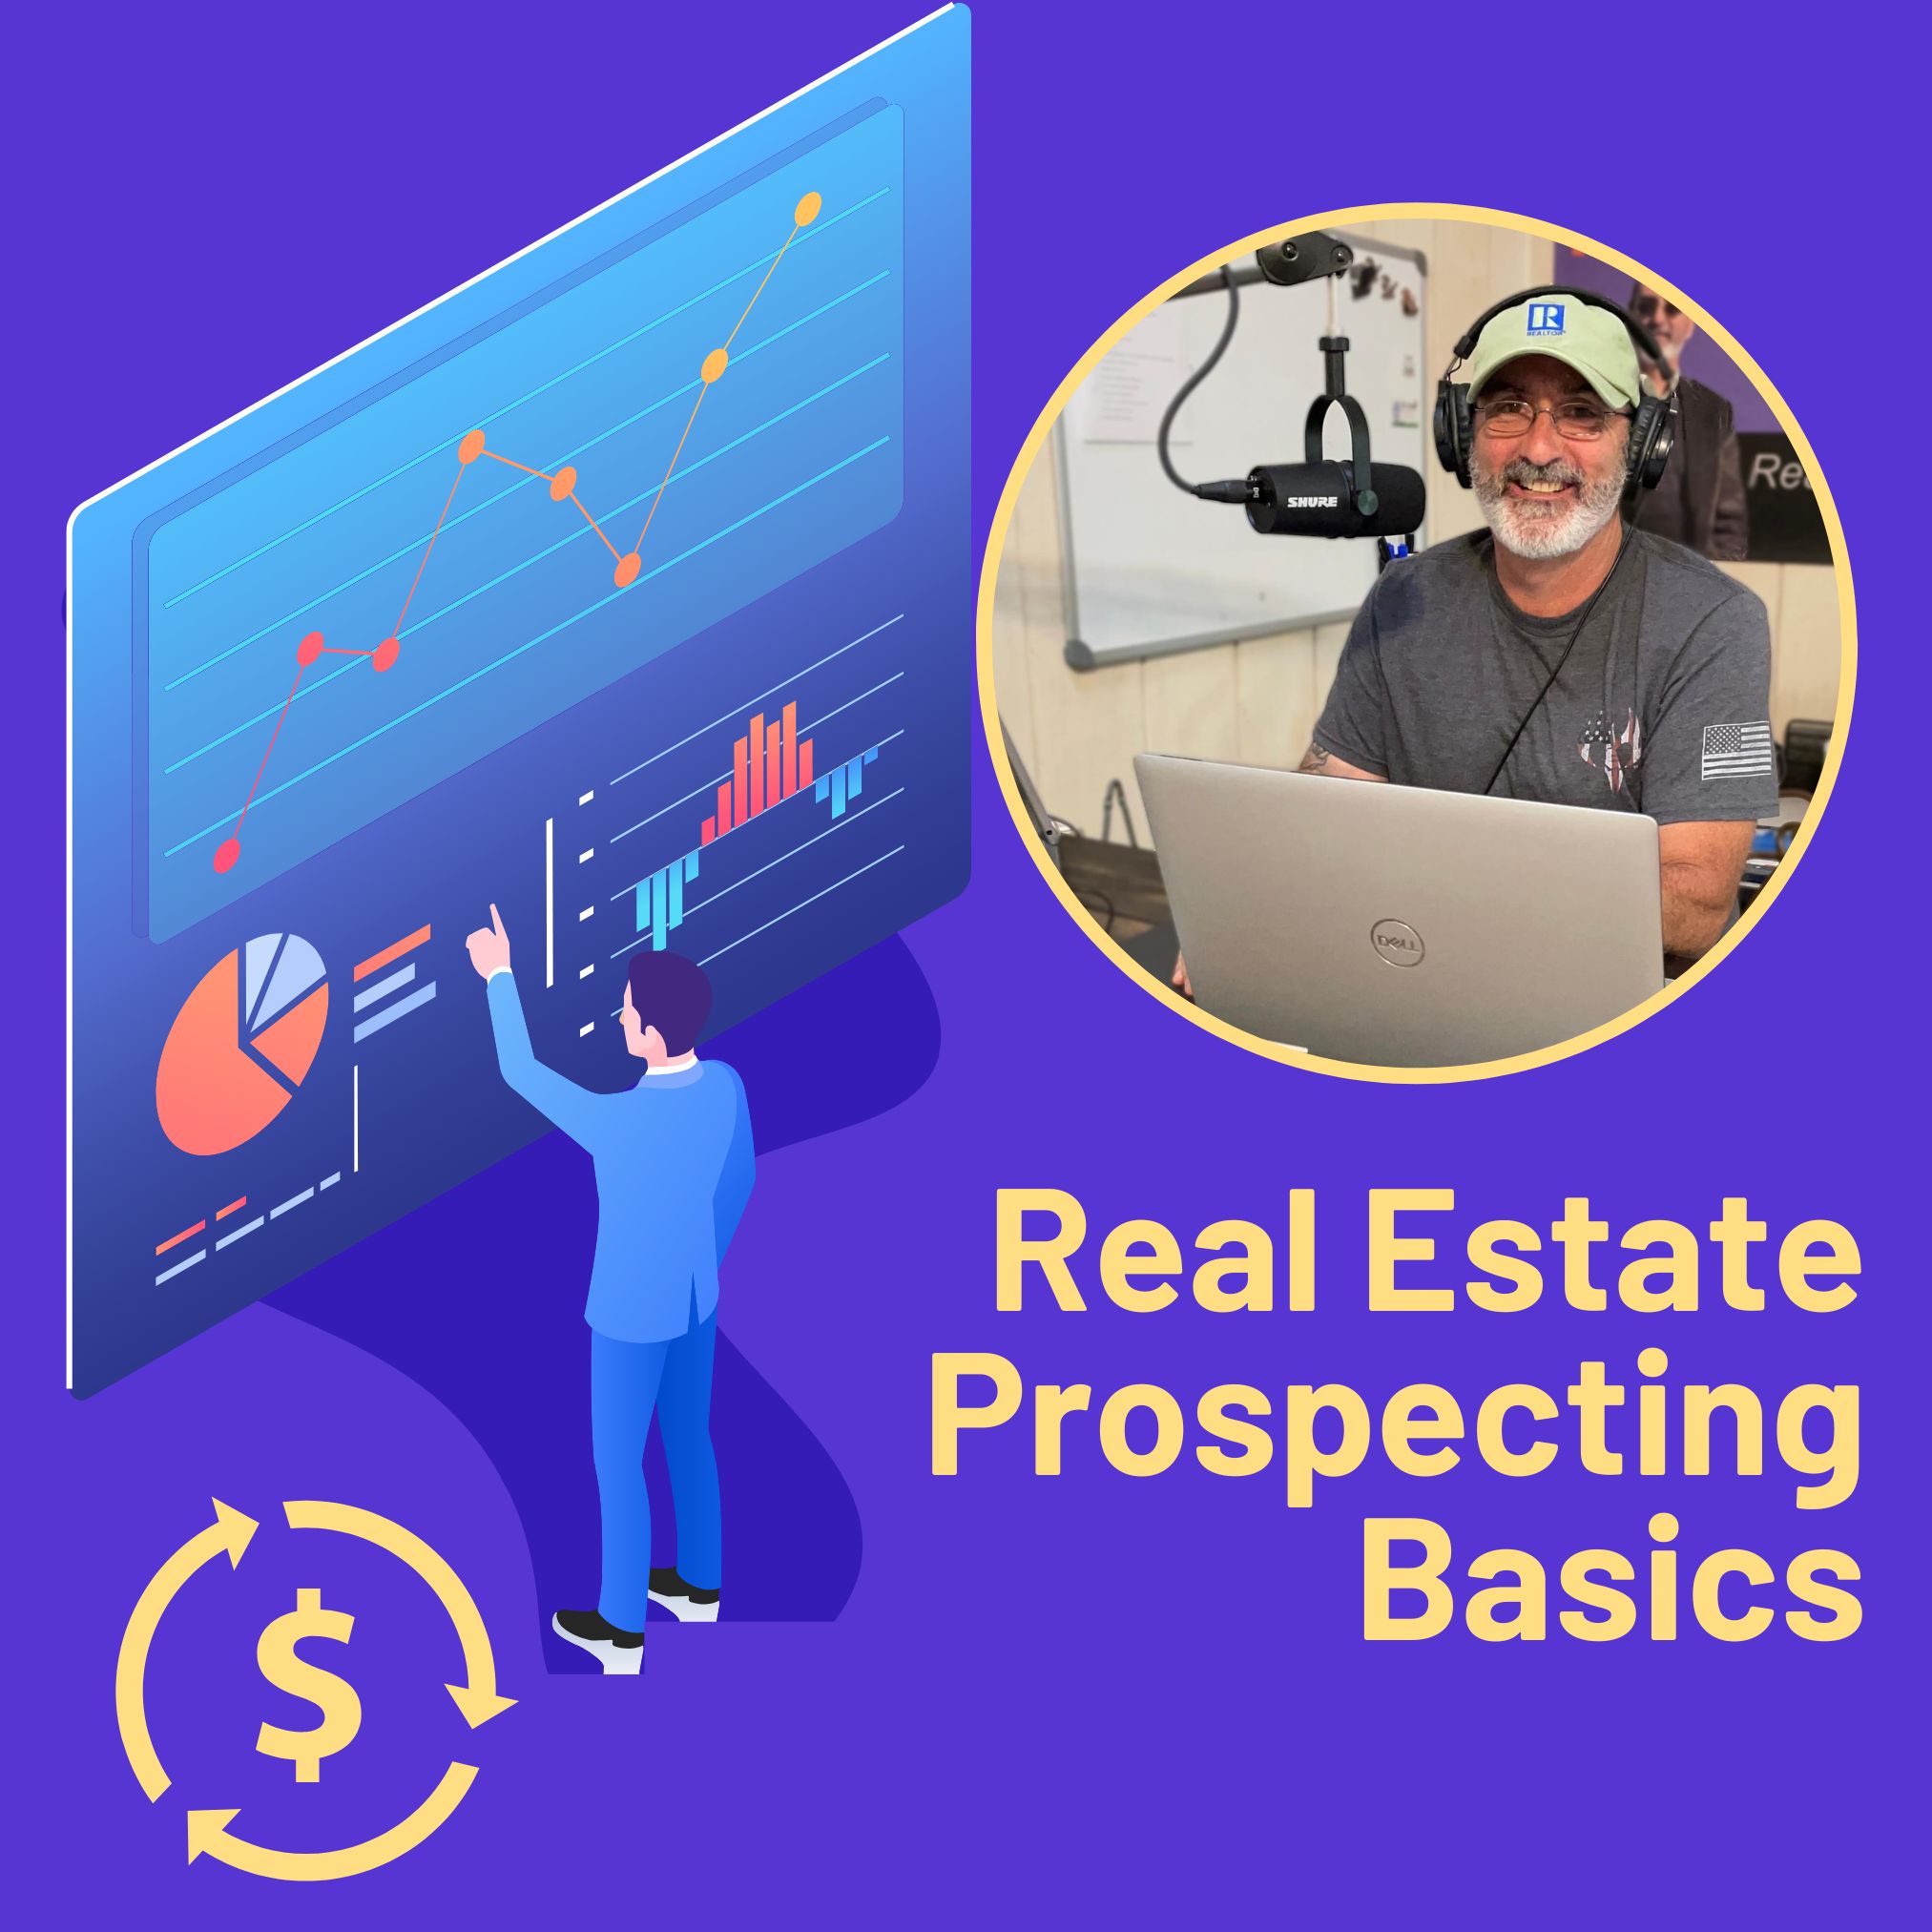 Real Estate Prospecting Basics